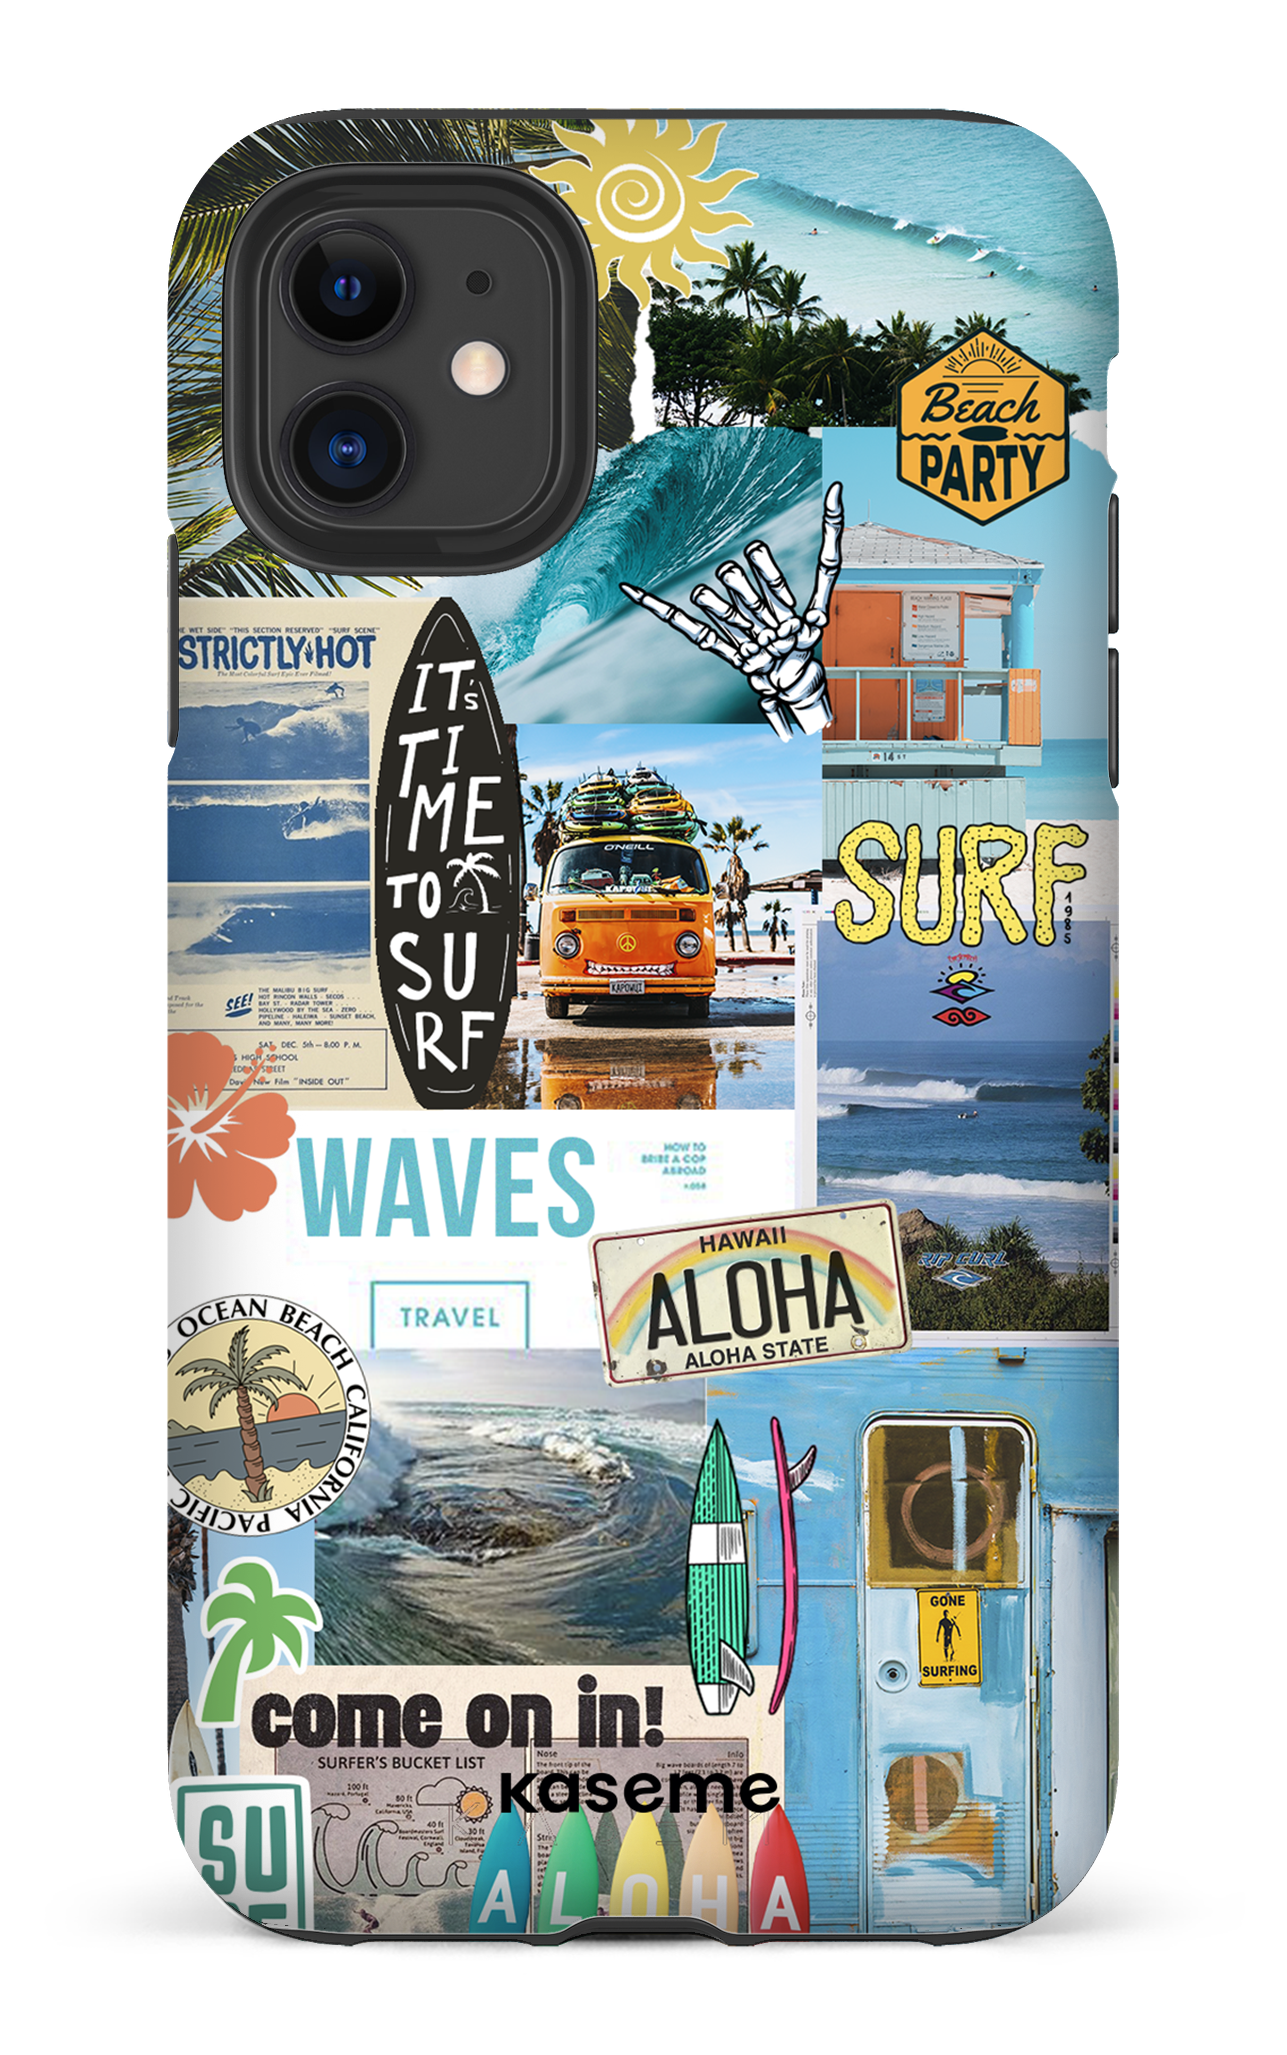 Aloha - iPhone 11